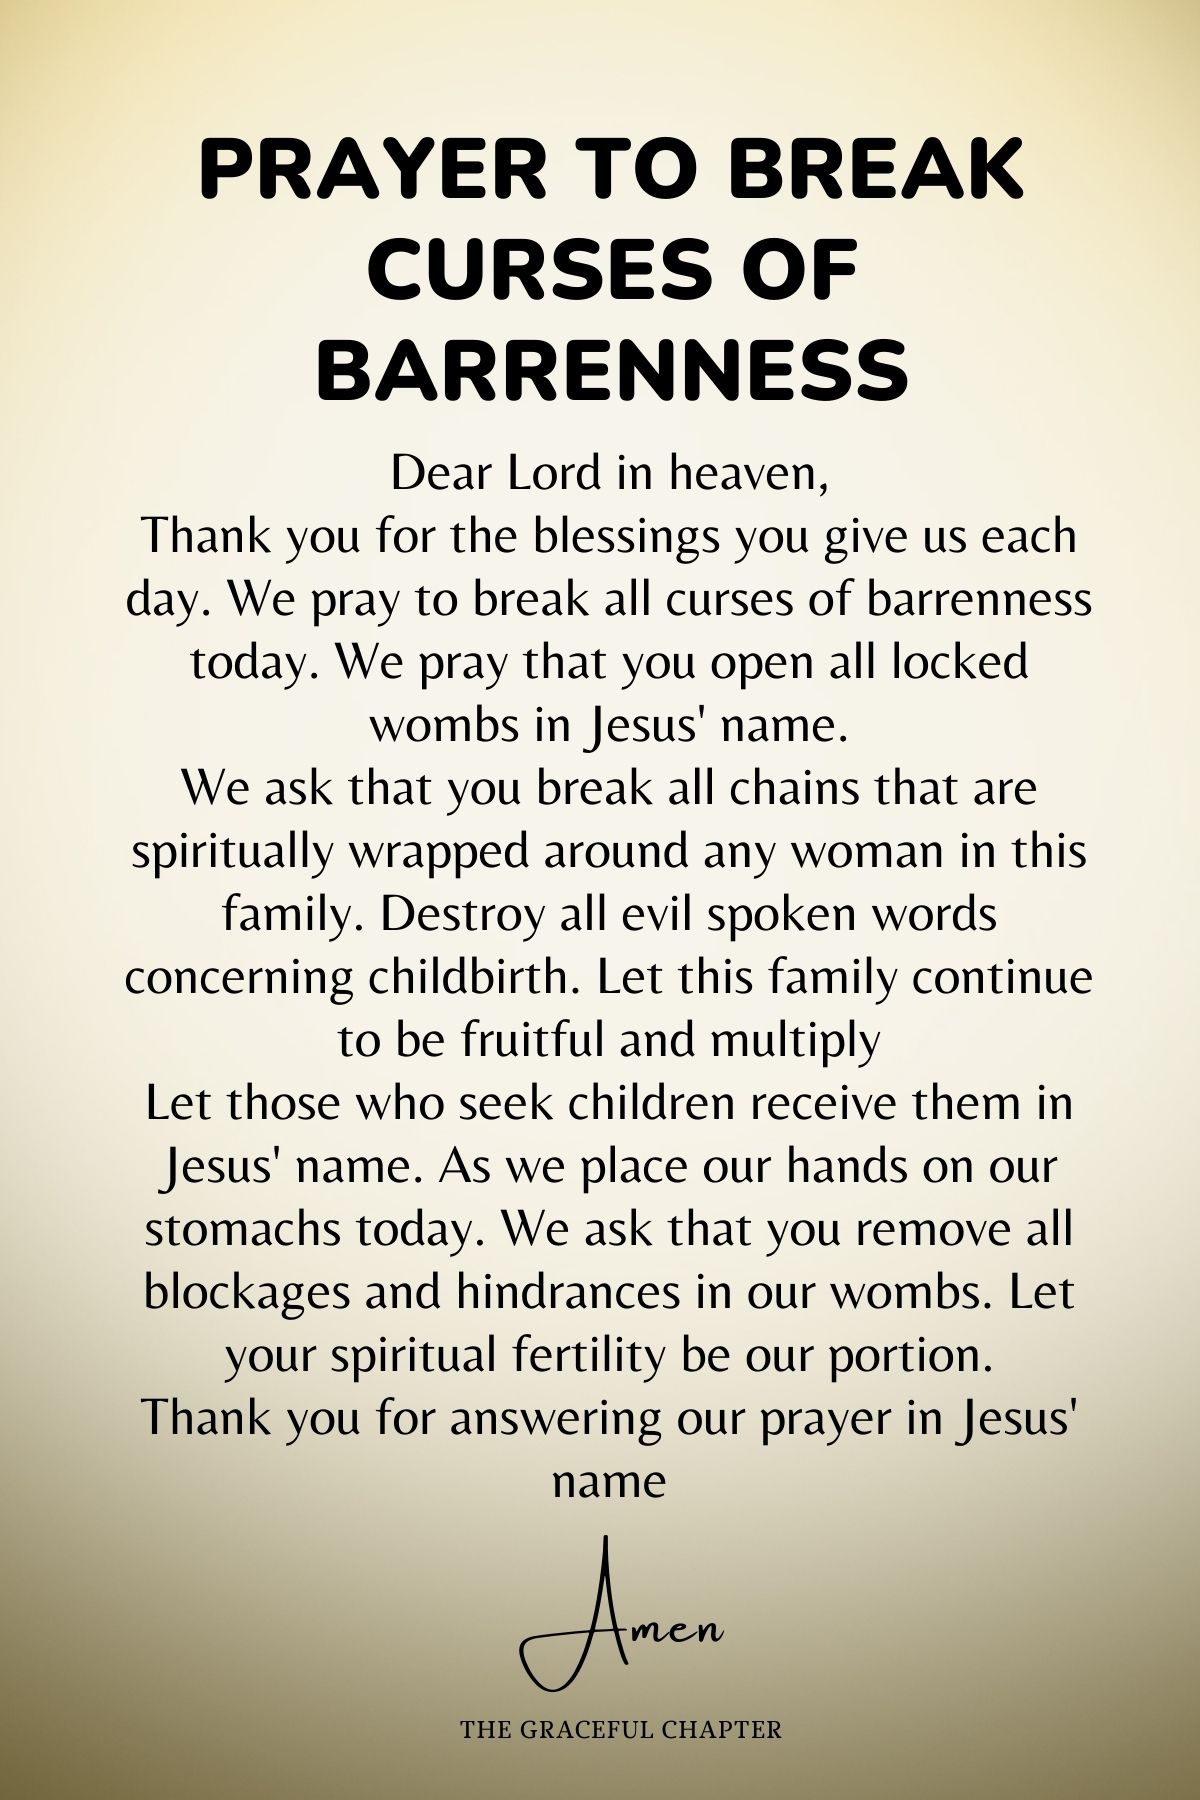 Prayer to break curses of barrenness